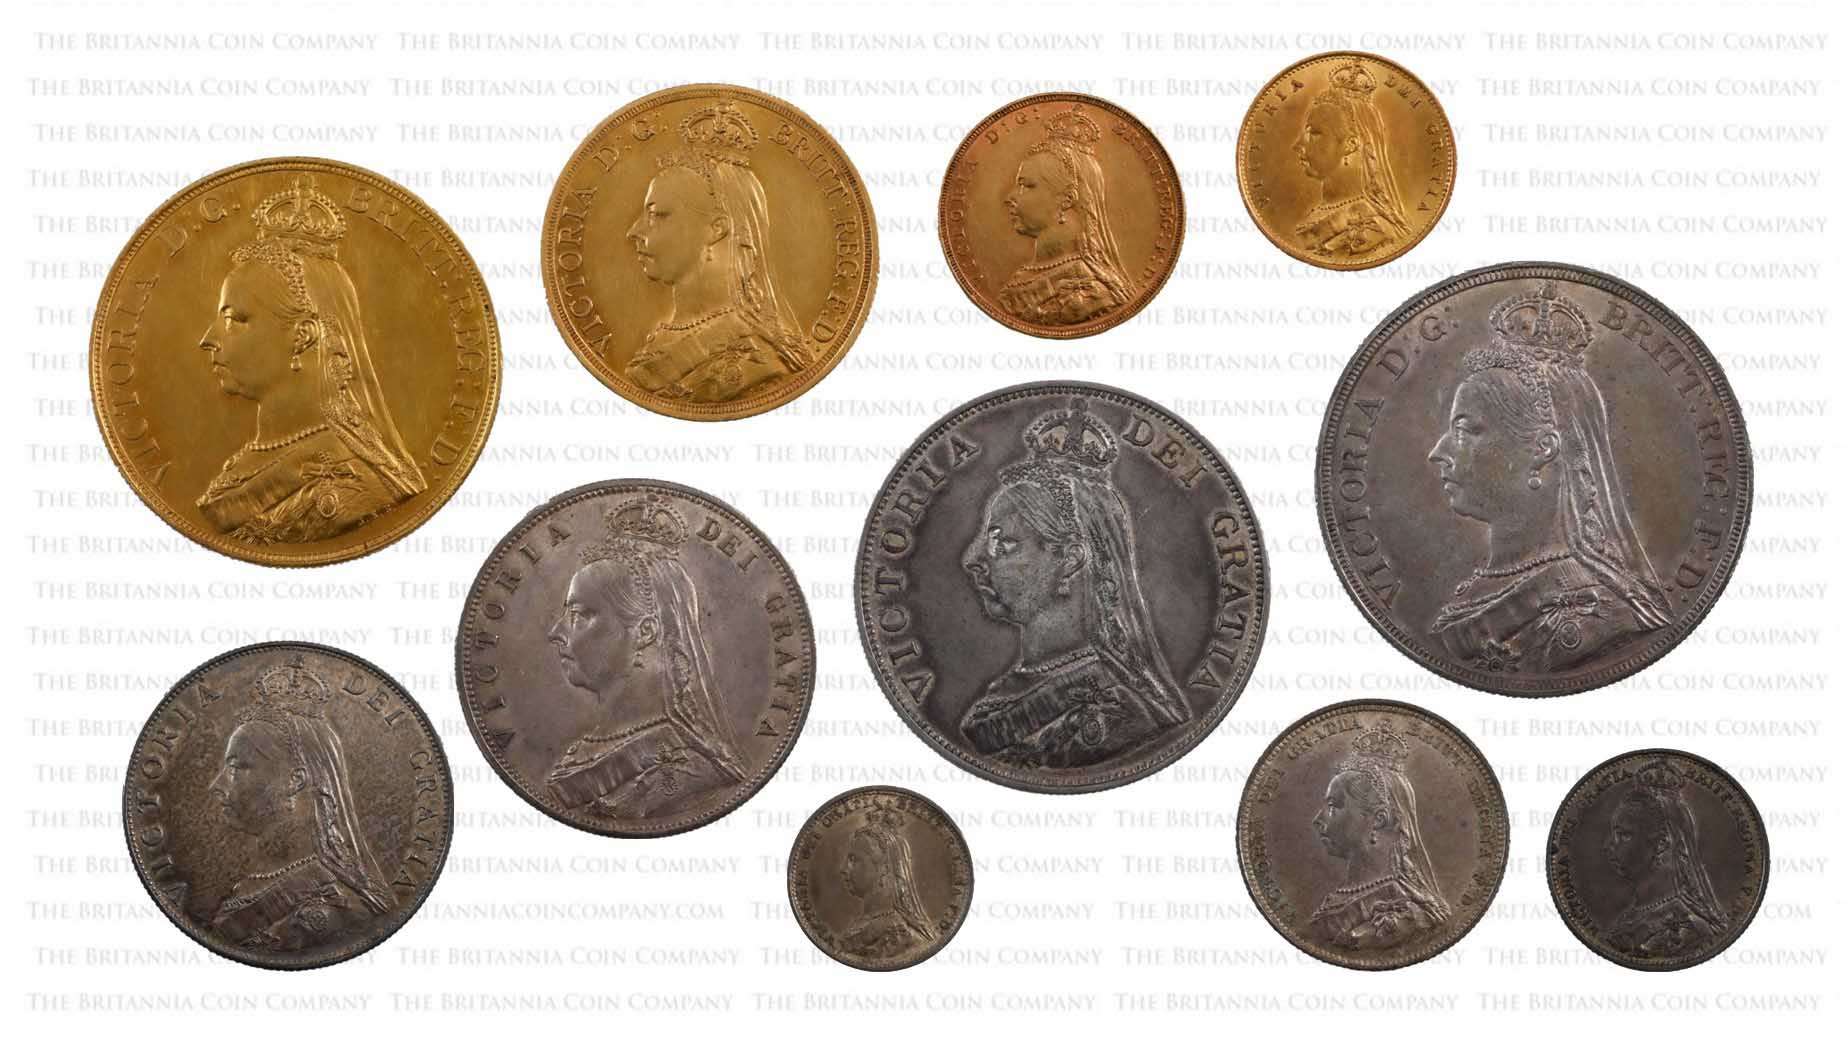 Obverse of coins with Jubilee Head in an 1887 Golden Jubilee Specimen Set.